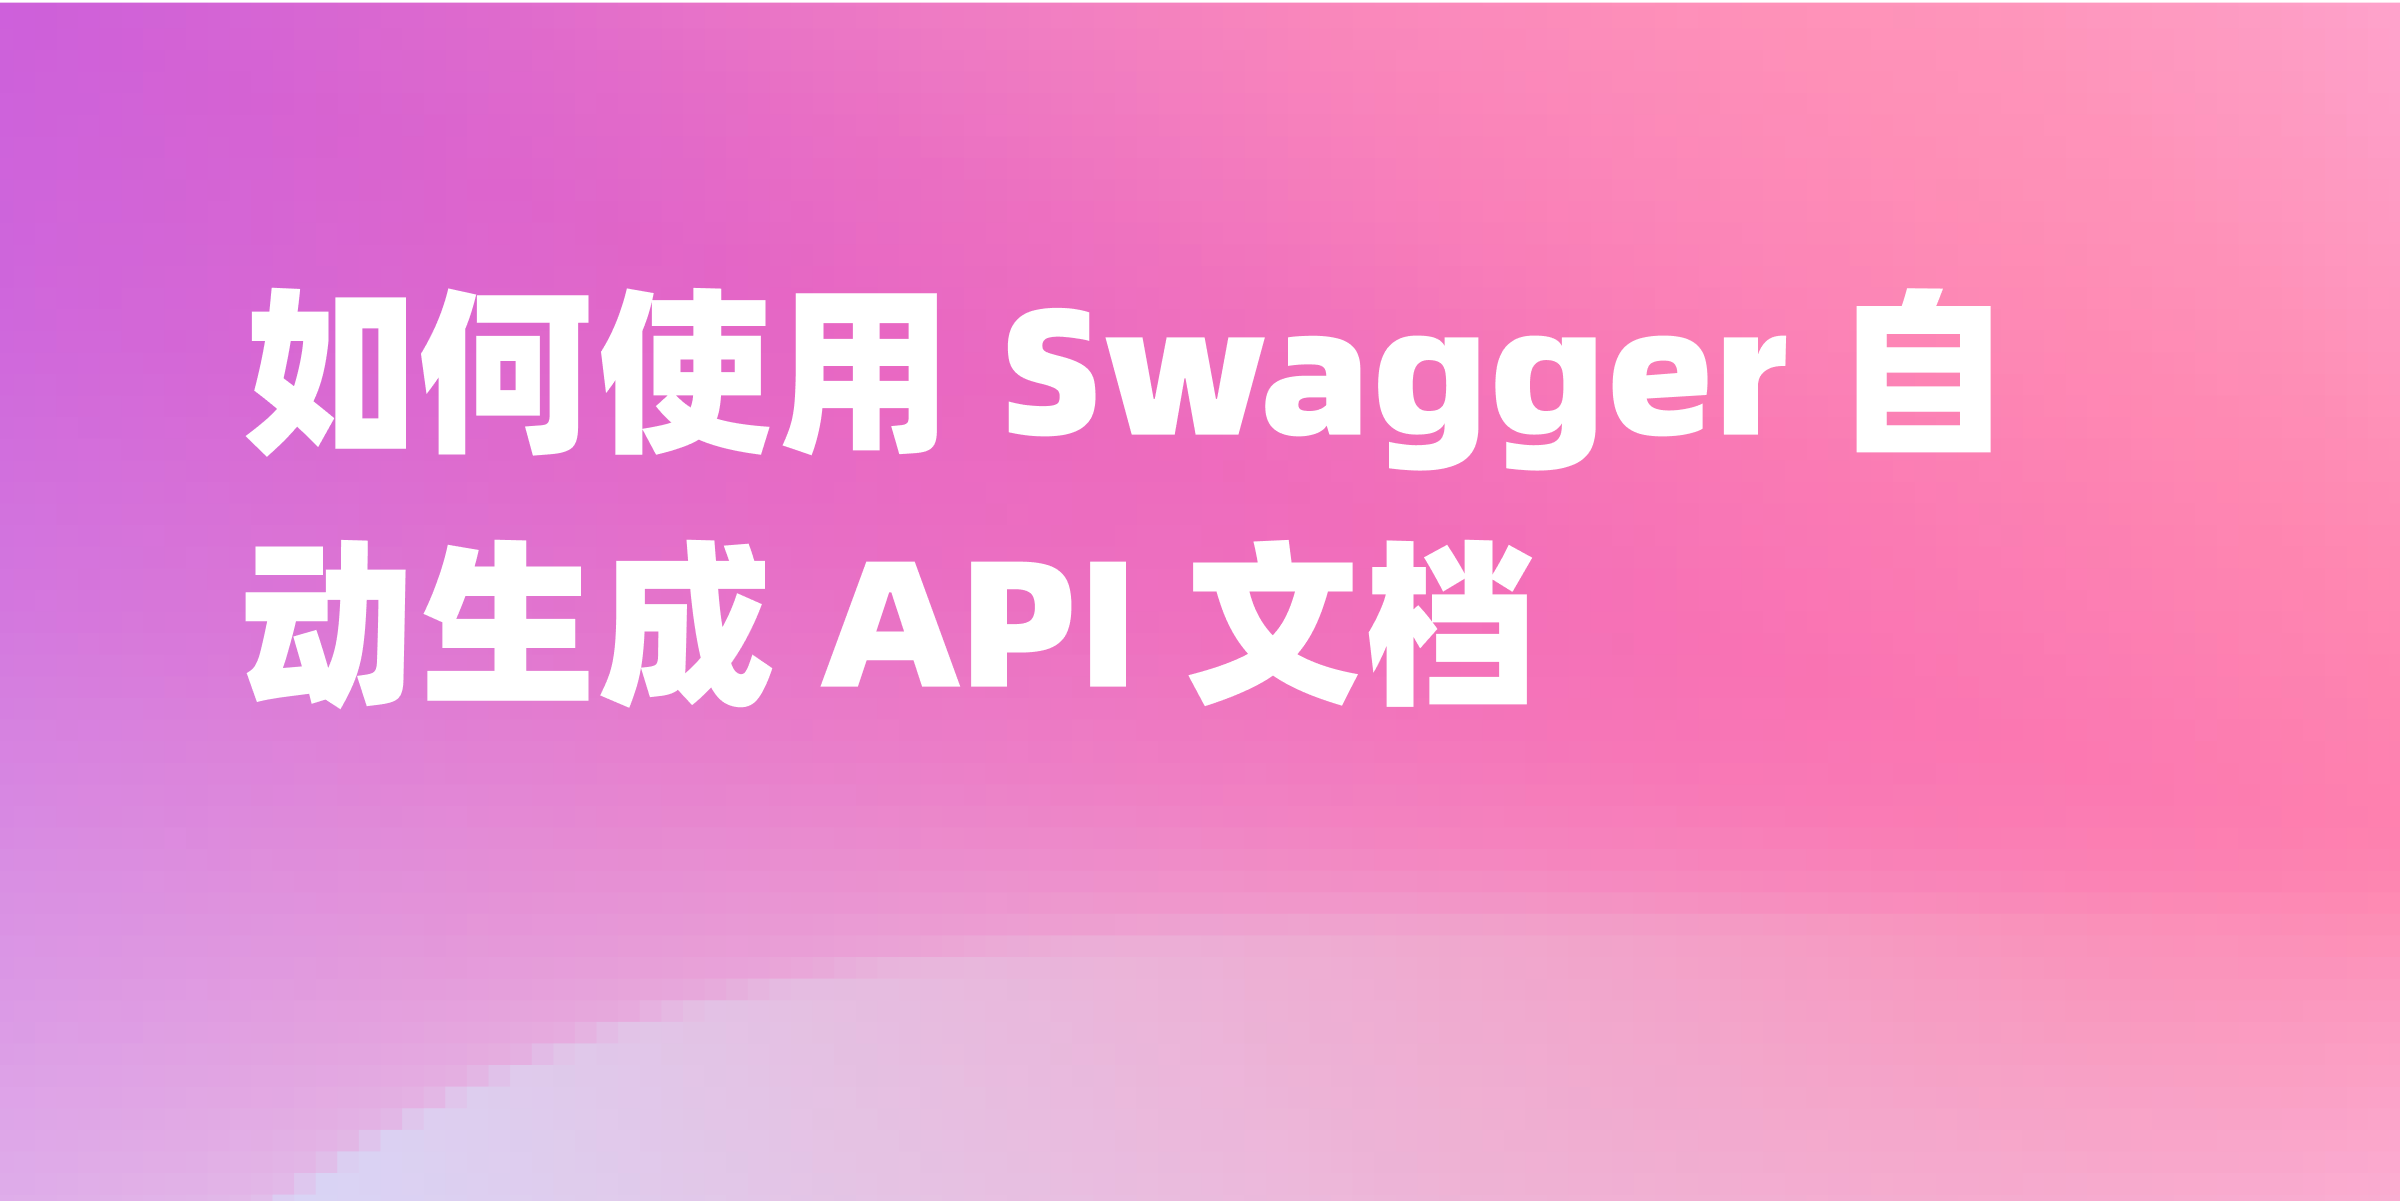 Swagger 自动生成 Api 文档：提高效率的利器